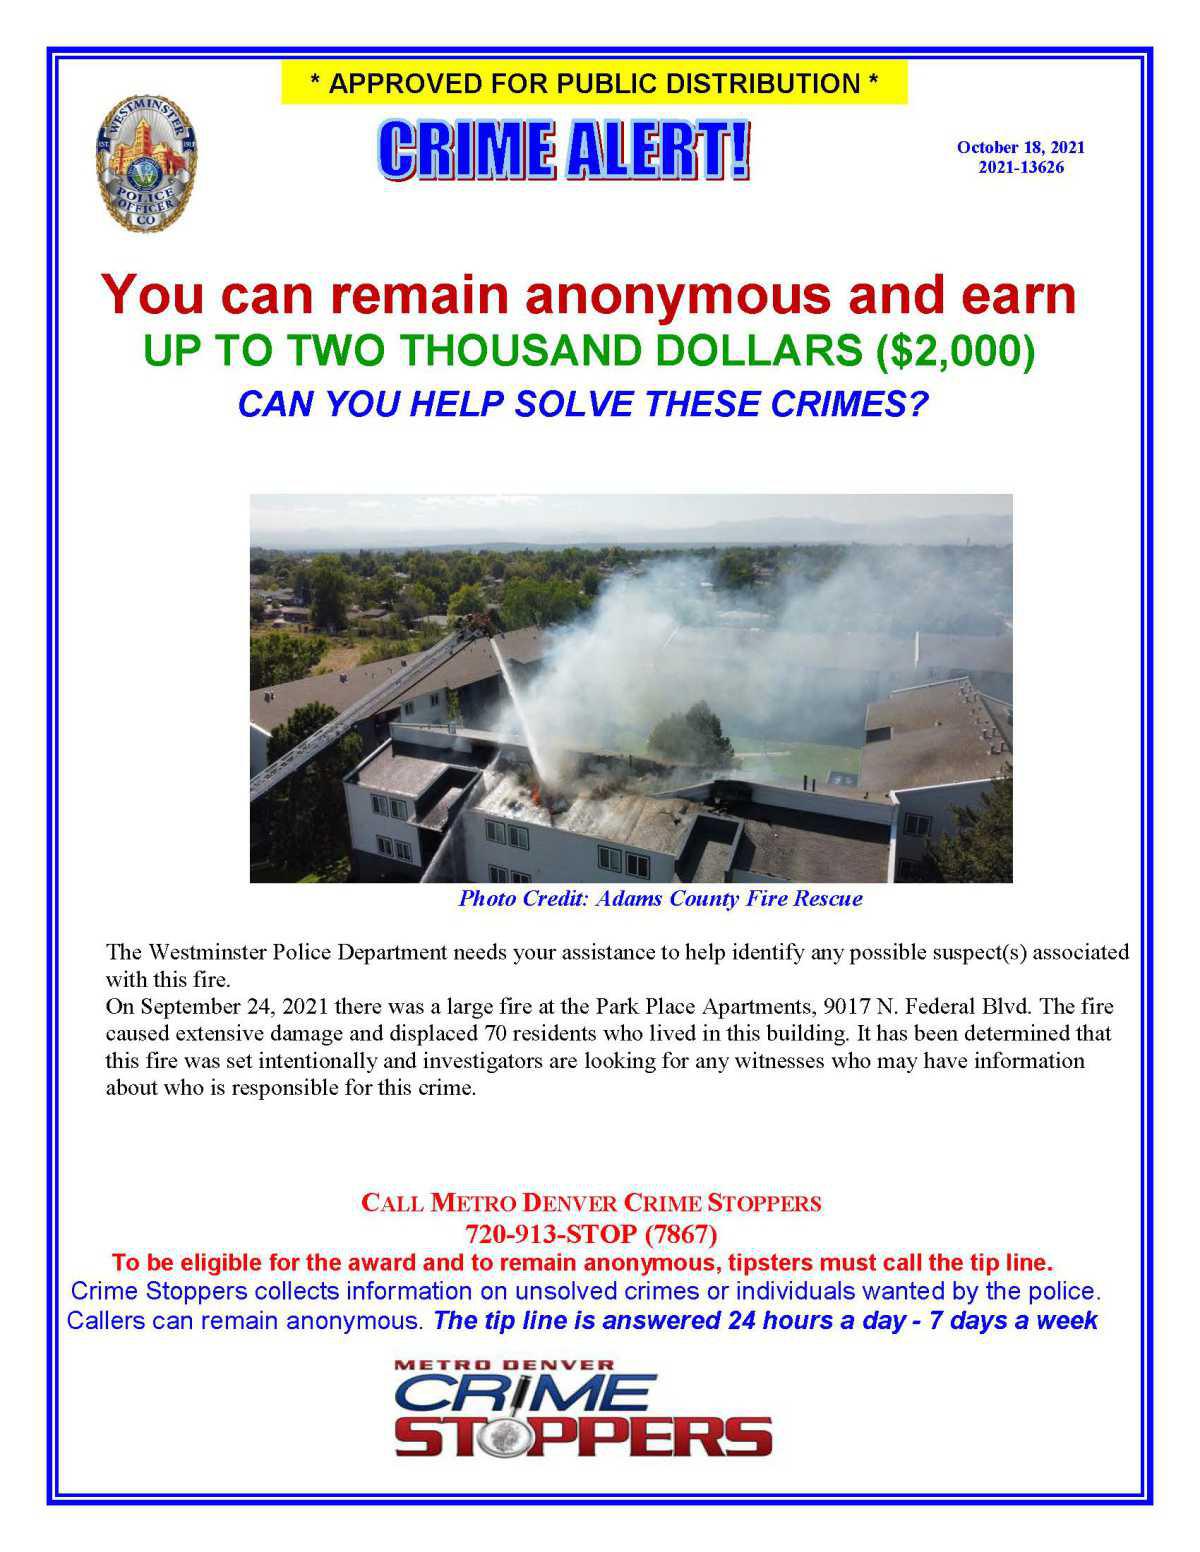 Crime Stoppers Alert - Arson Investigation